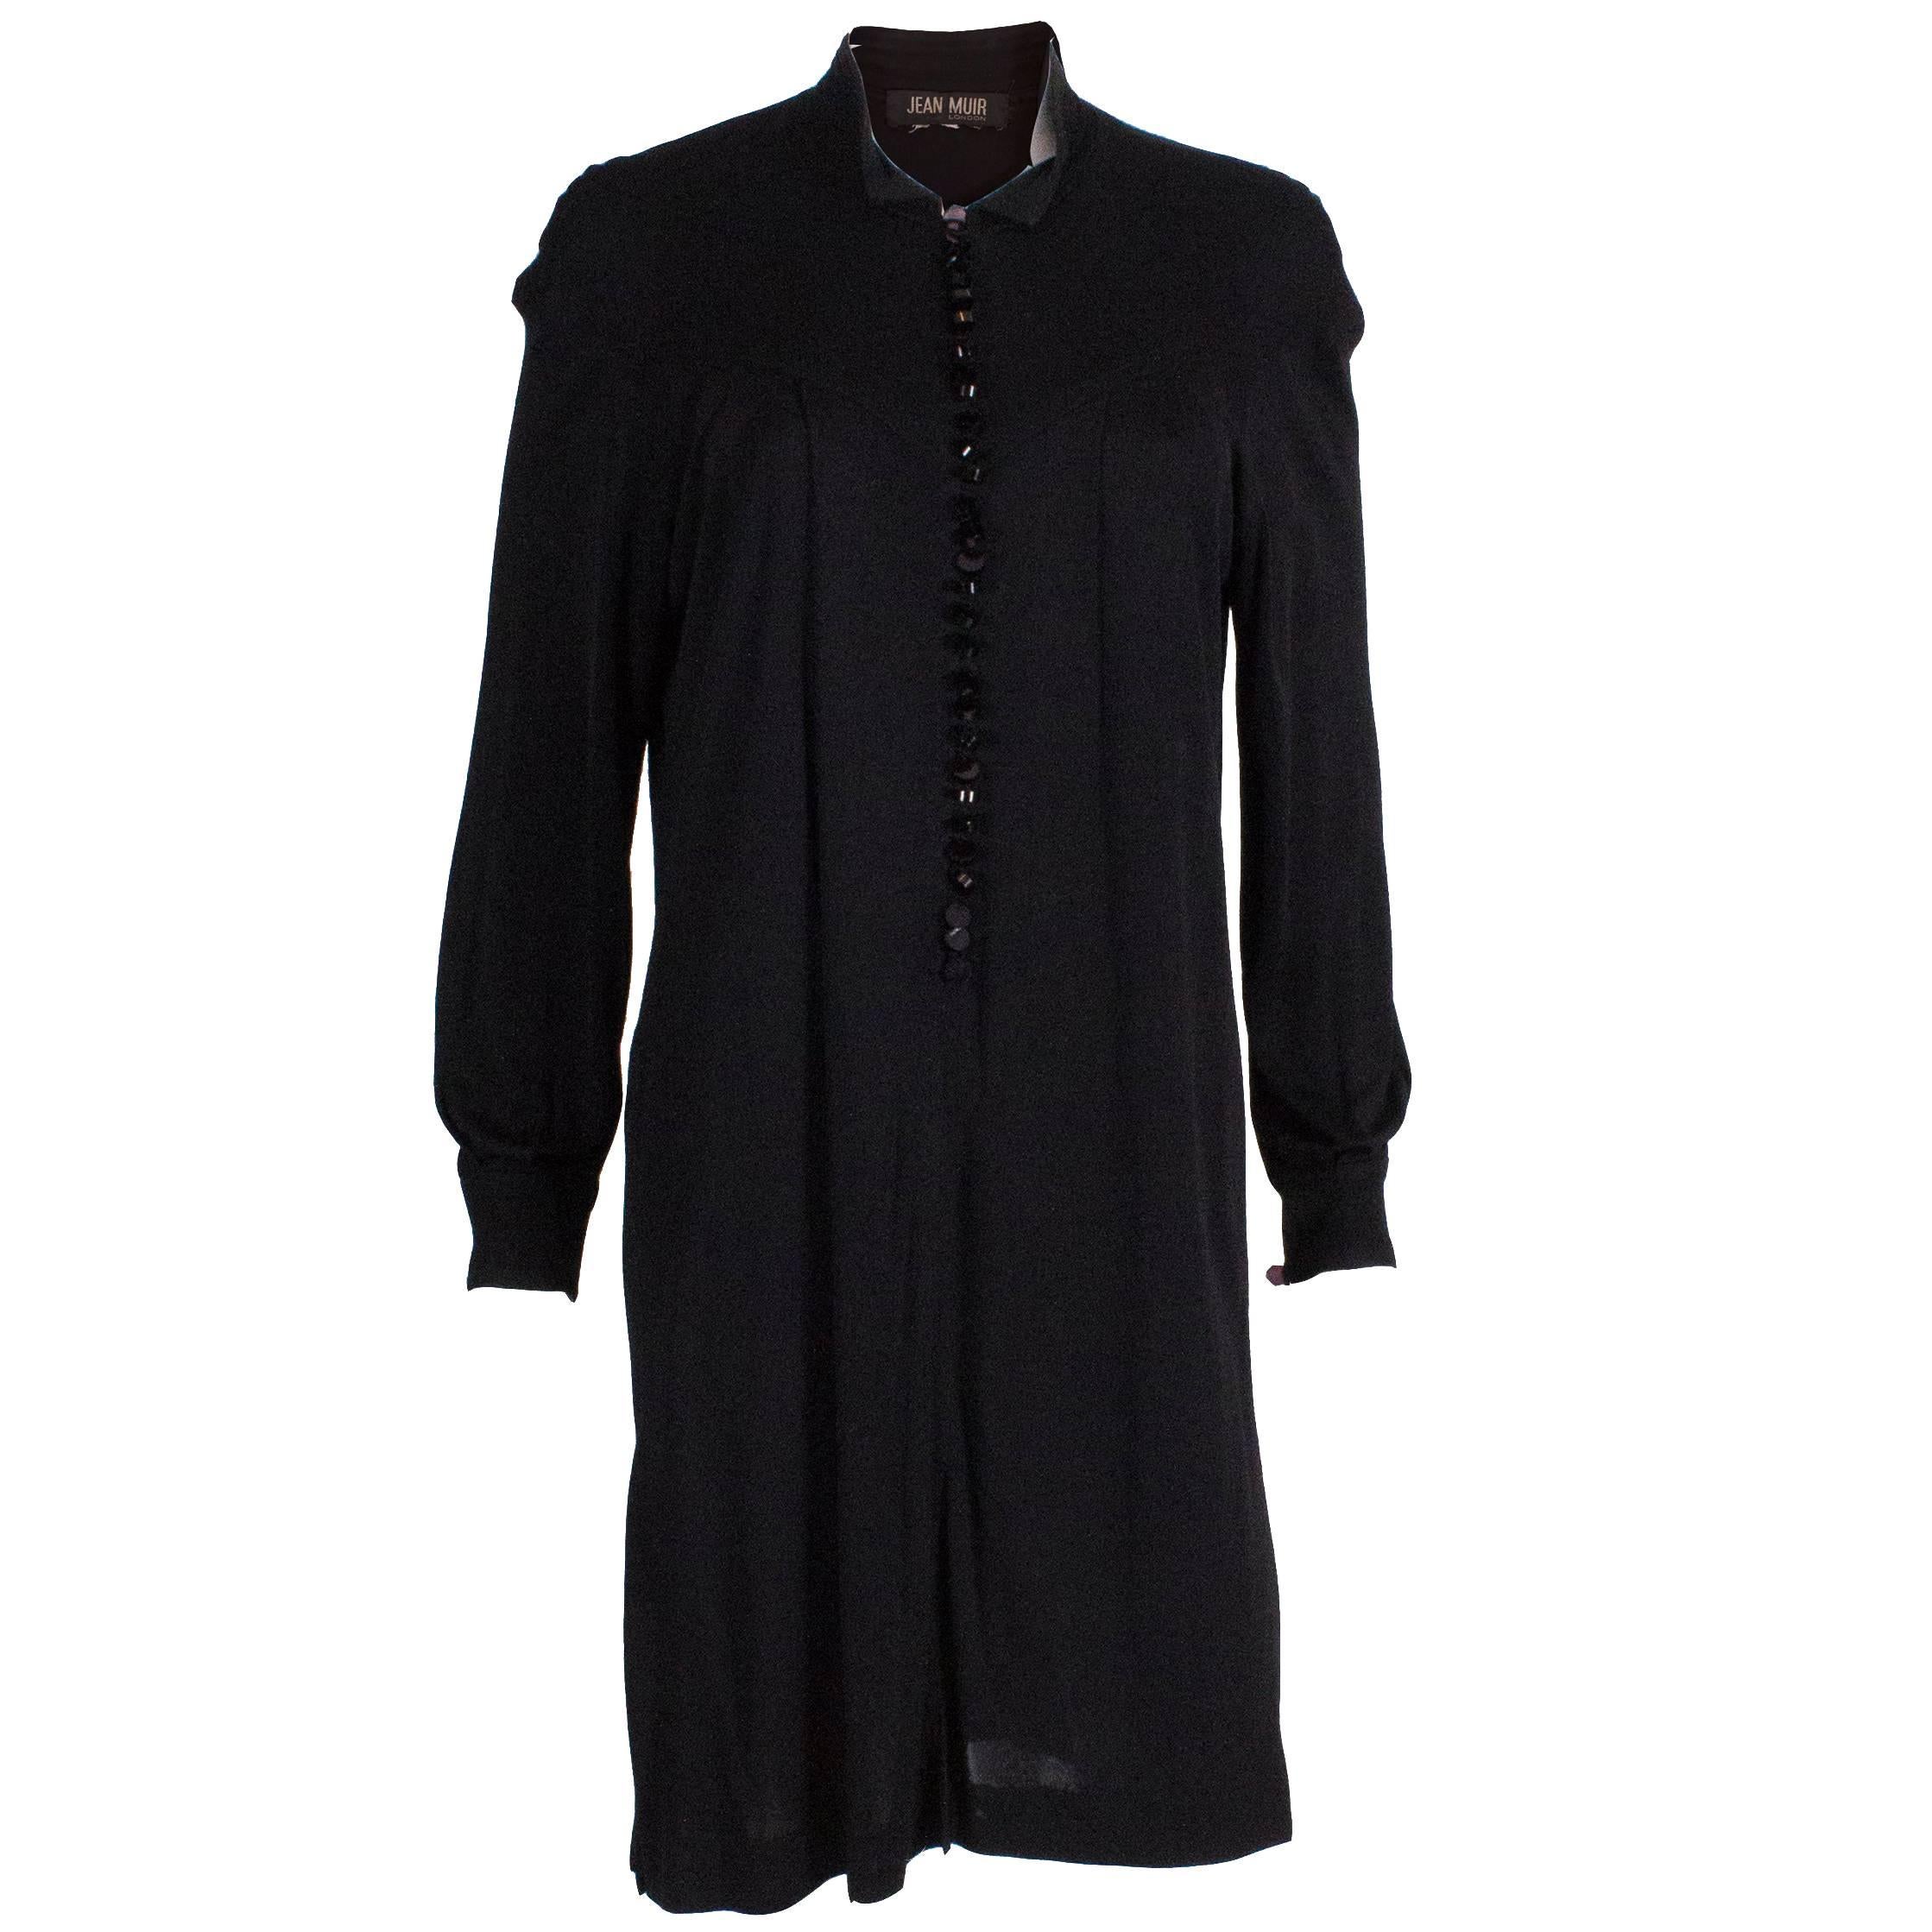 Jean Muir Black Tunic Dress